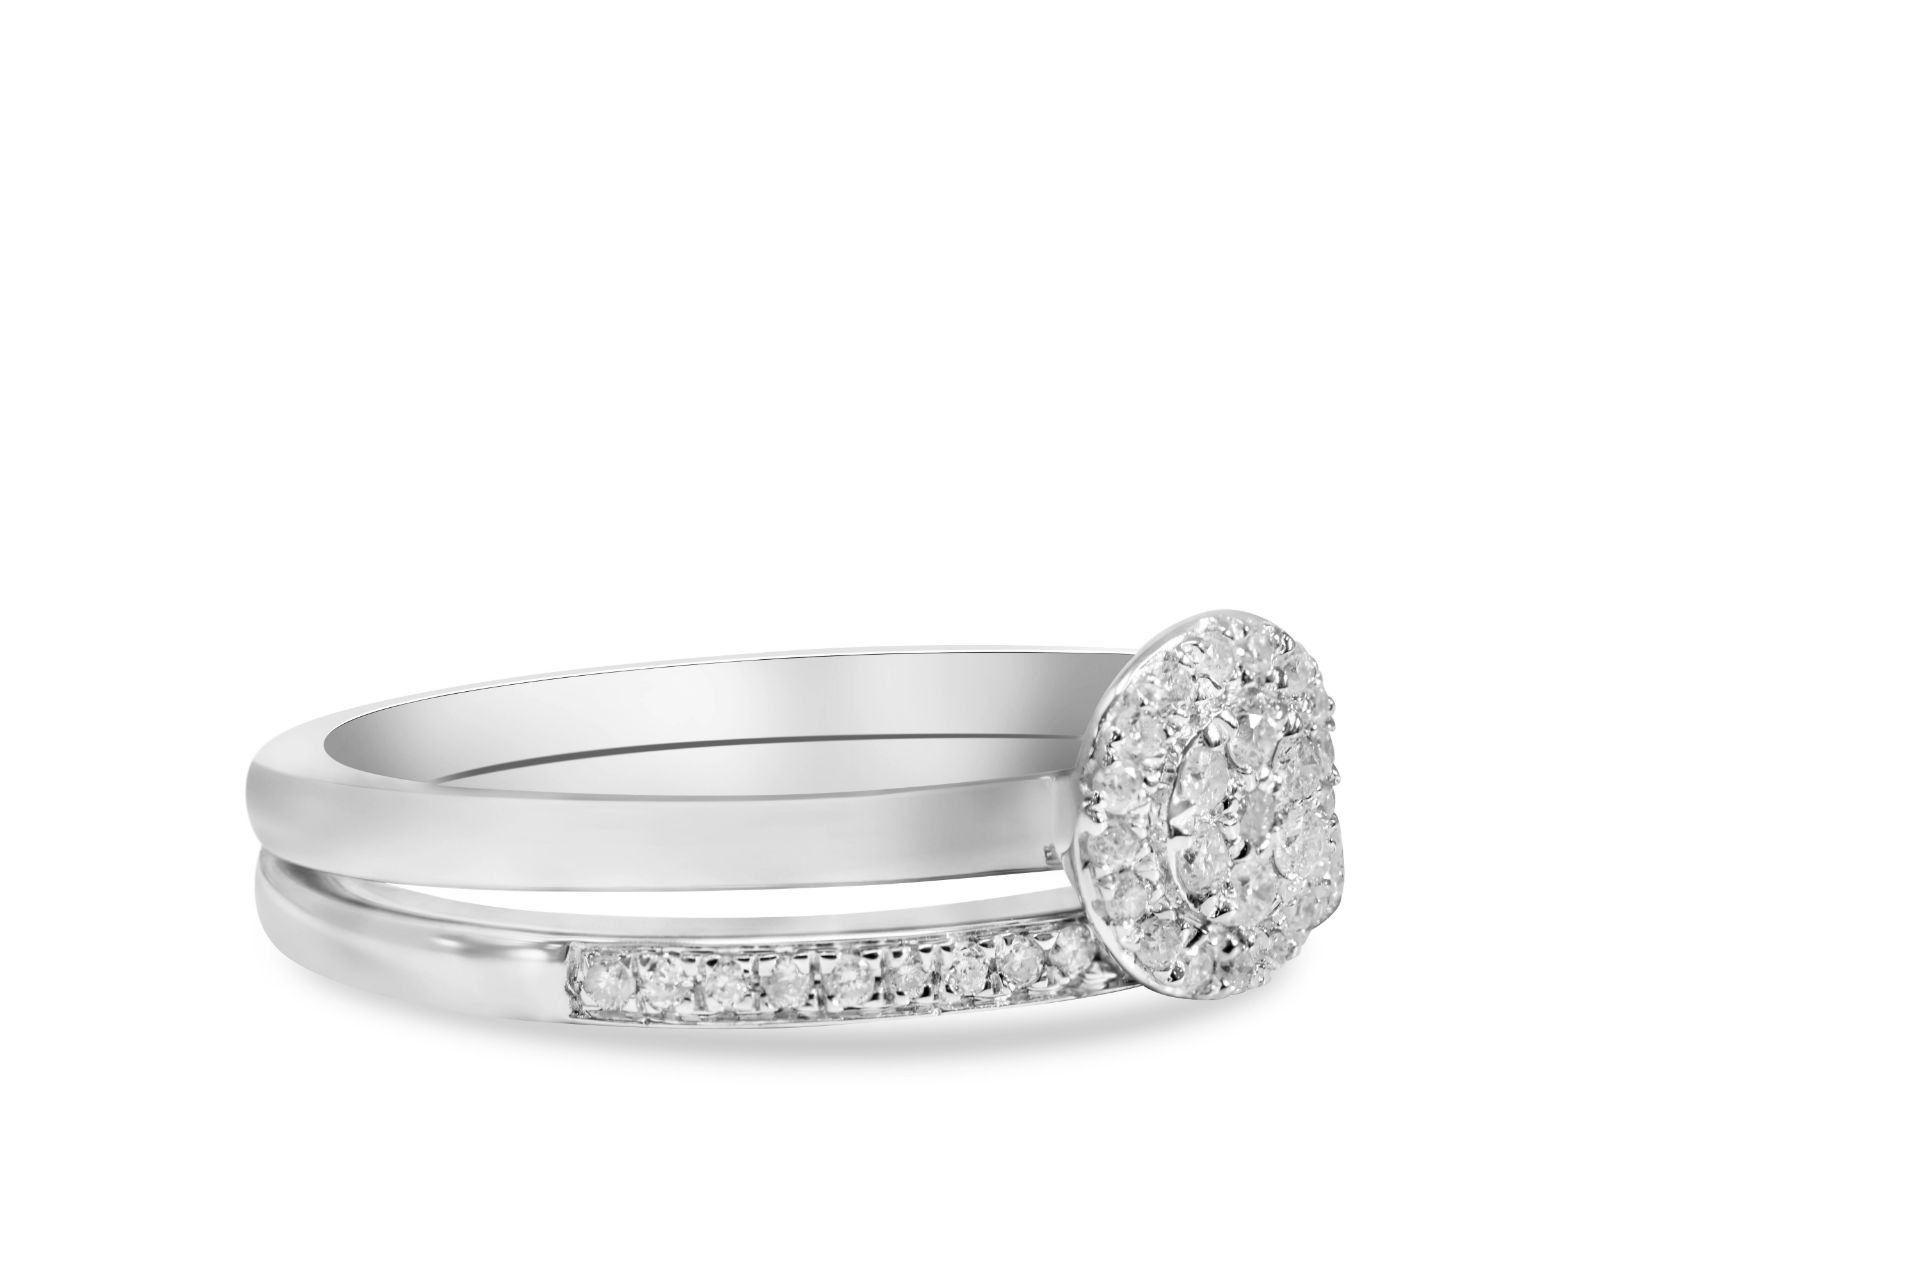 Matching Bridal Set of Engagement and Wedding ring - Image 3 of 3